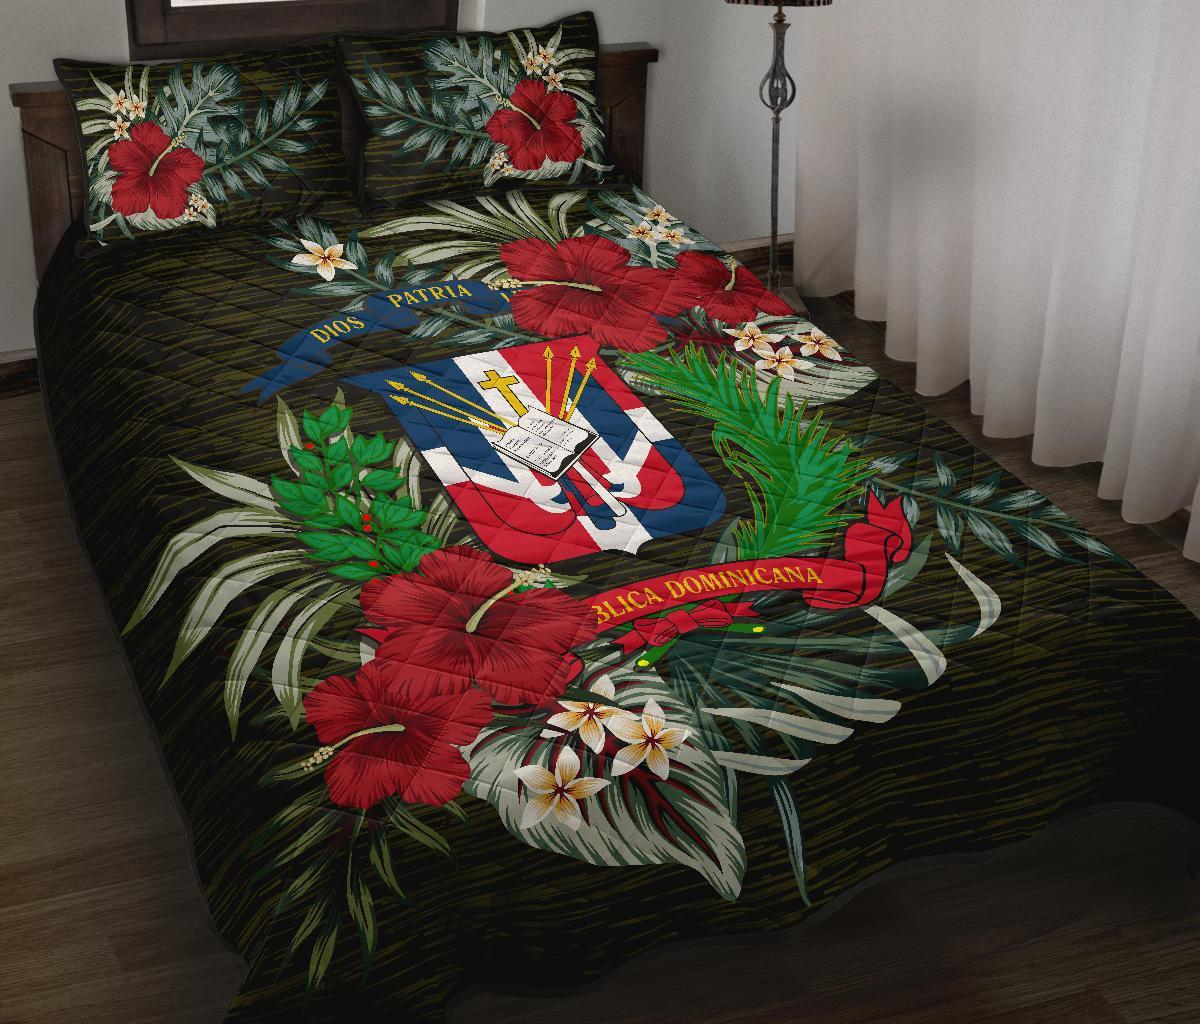 dominican-republic-quilt-bed-set-special-hibiscus